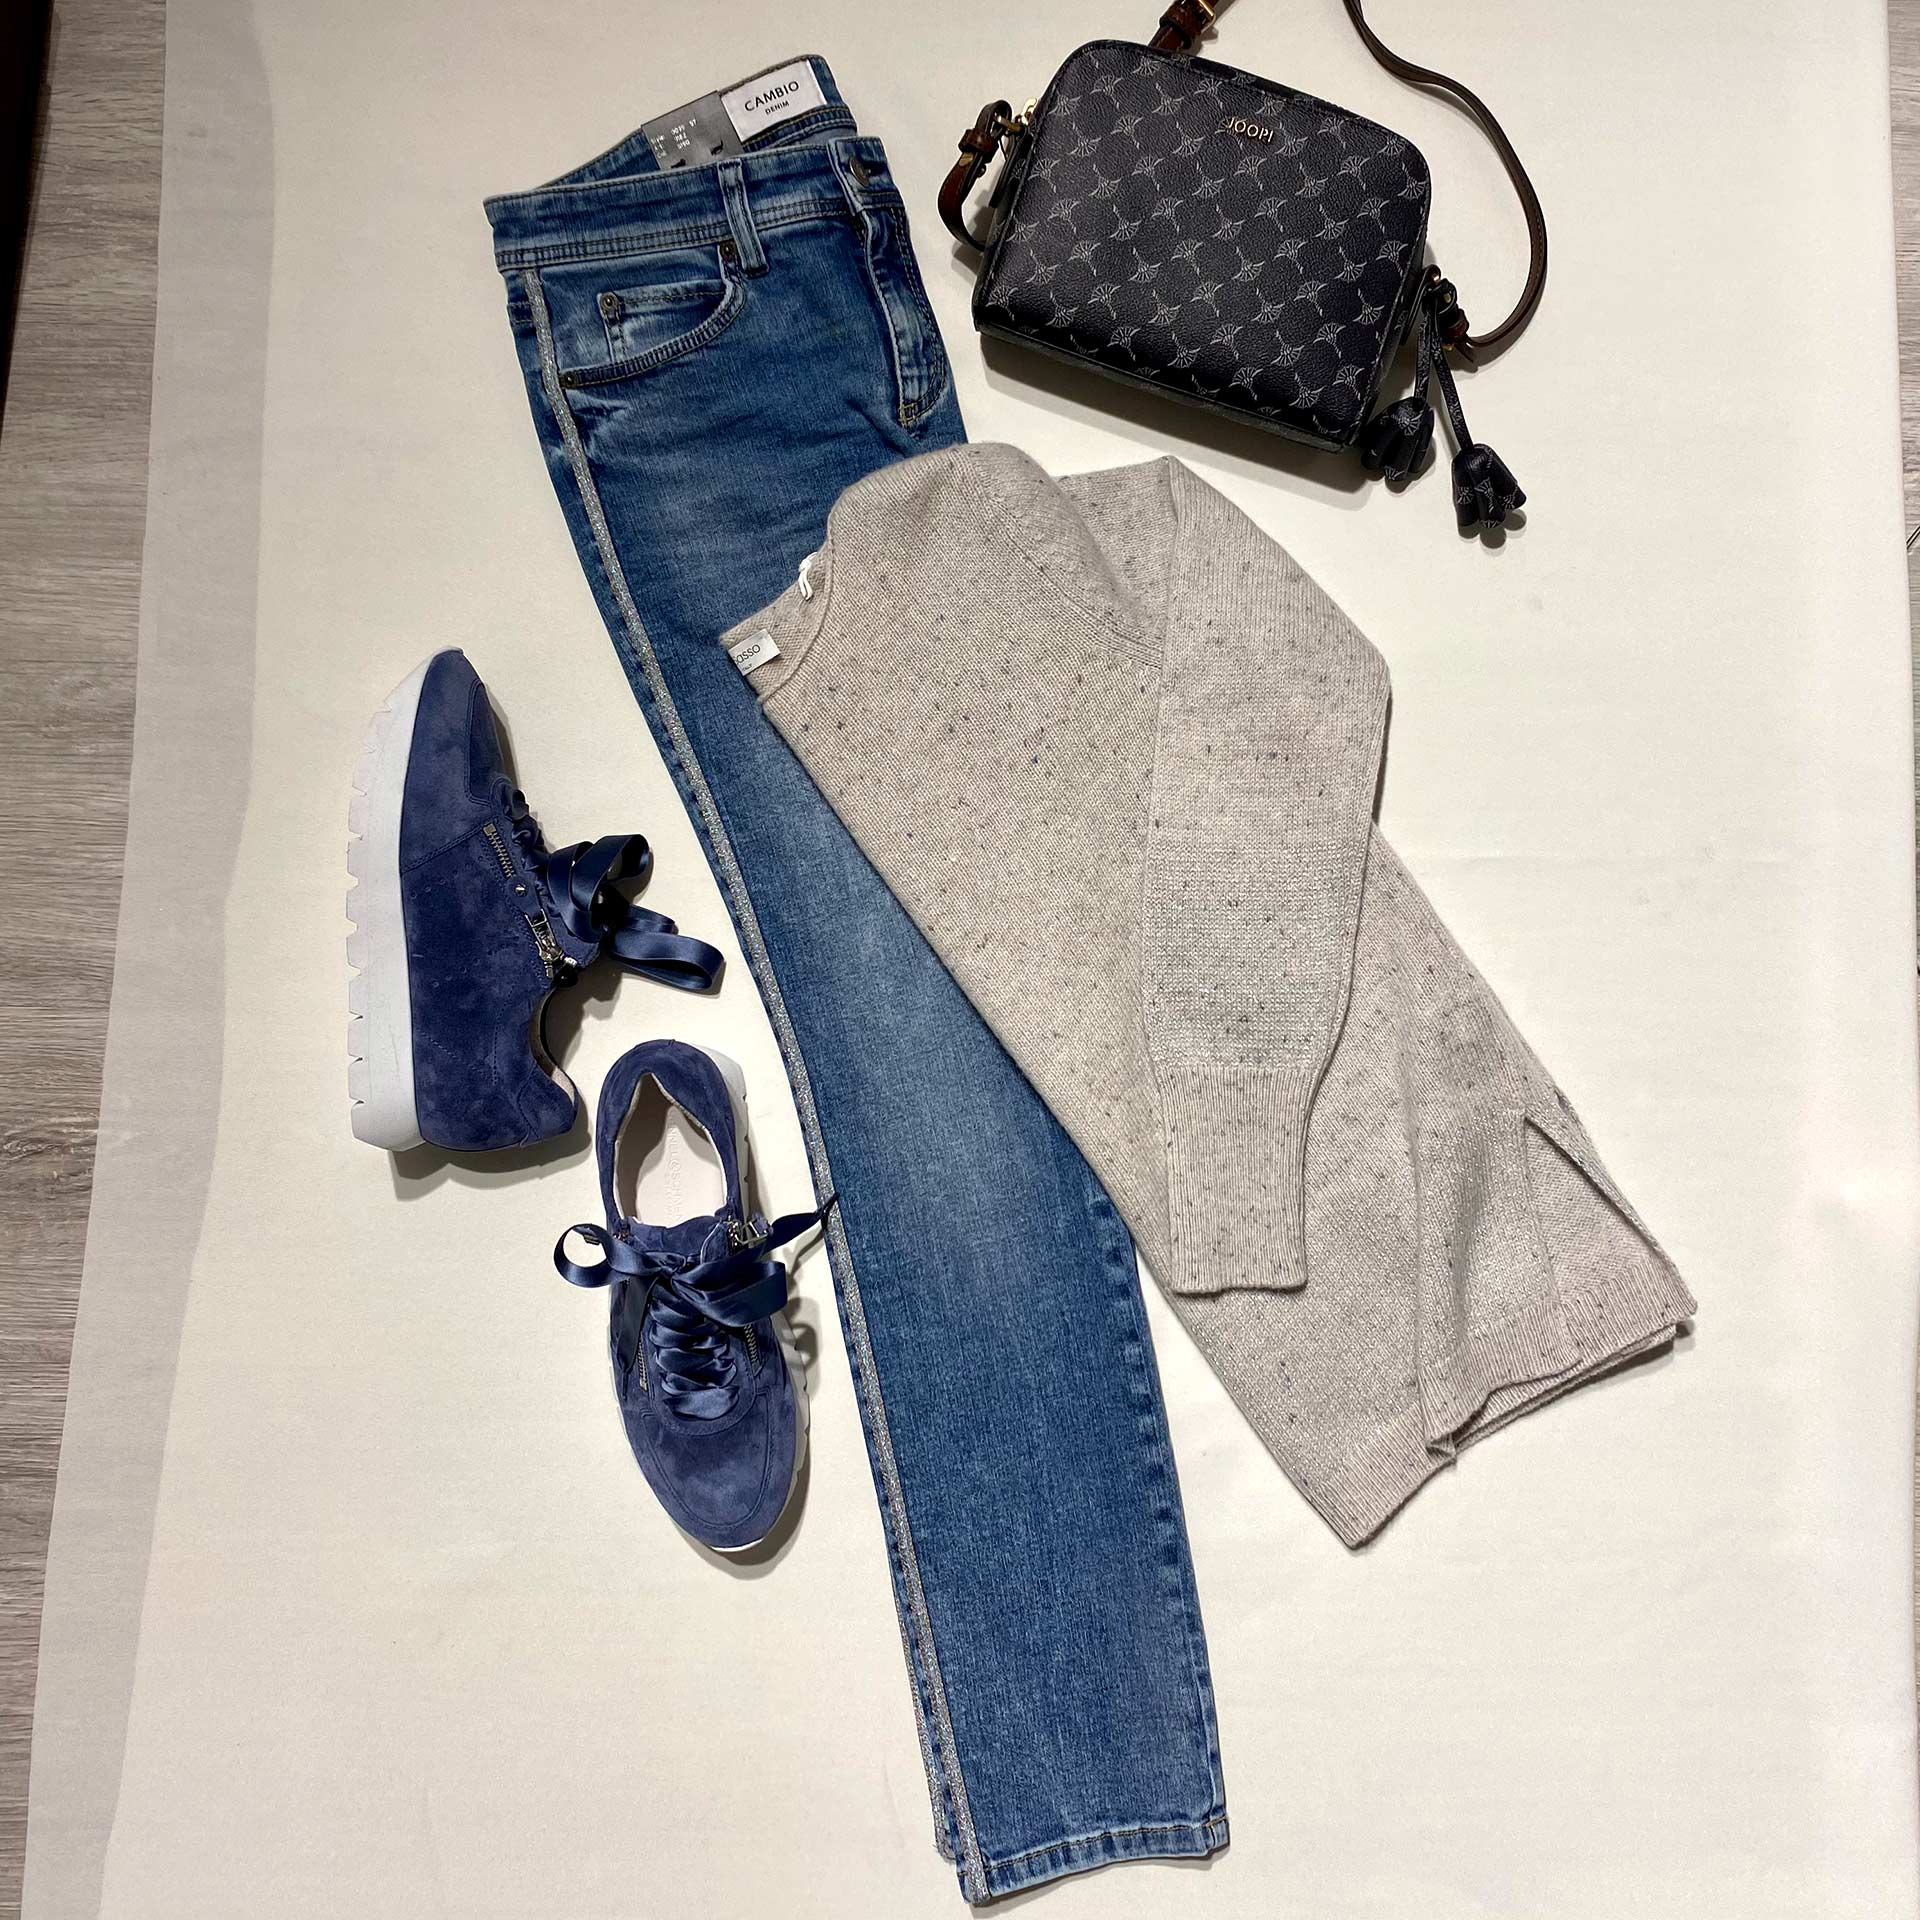 Jeans - Pullover - Sneaker  - Tasche